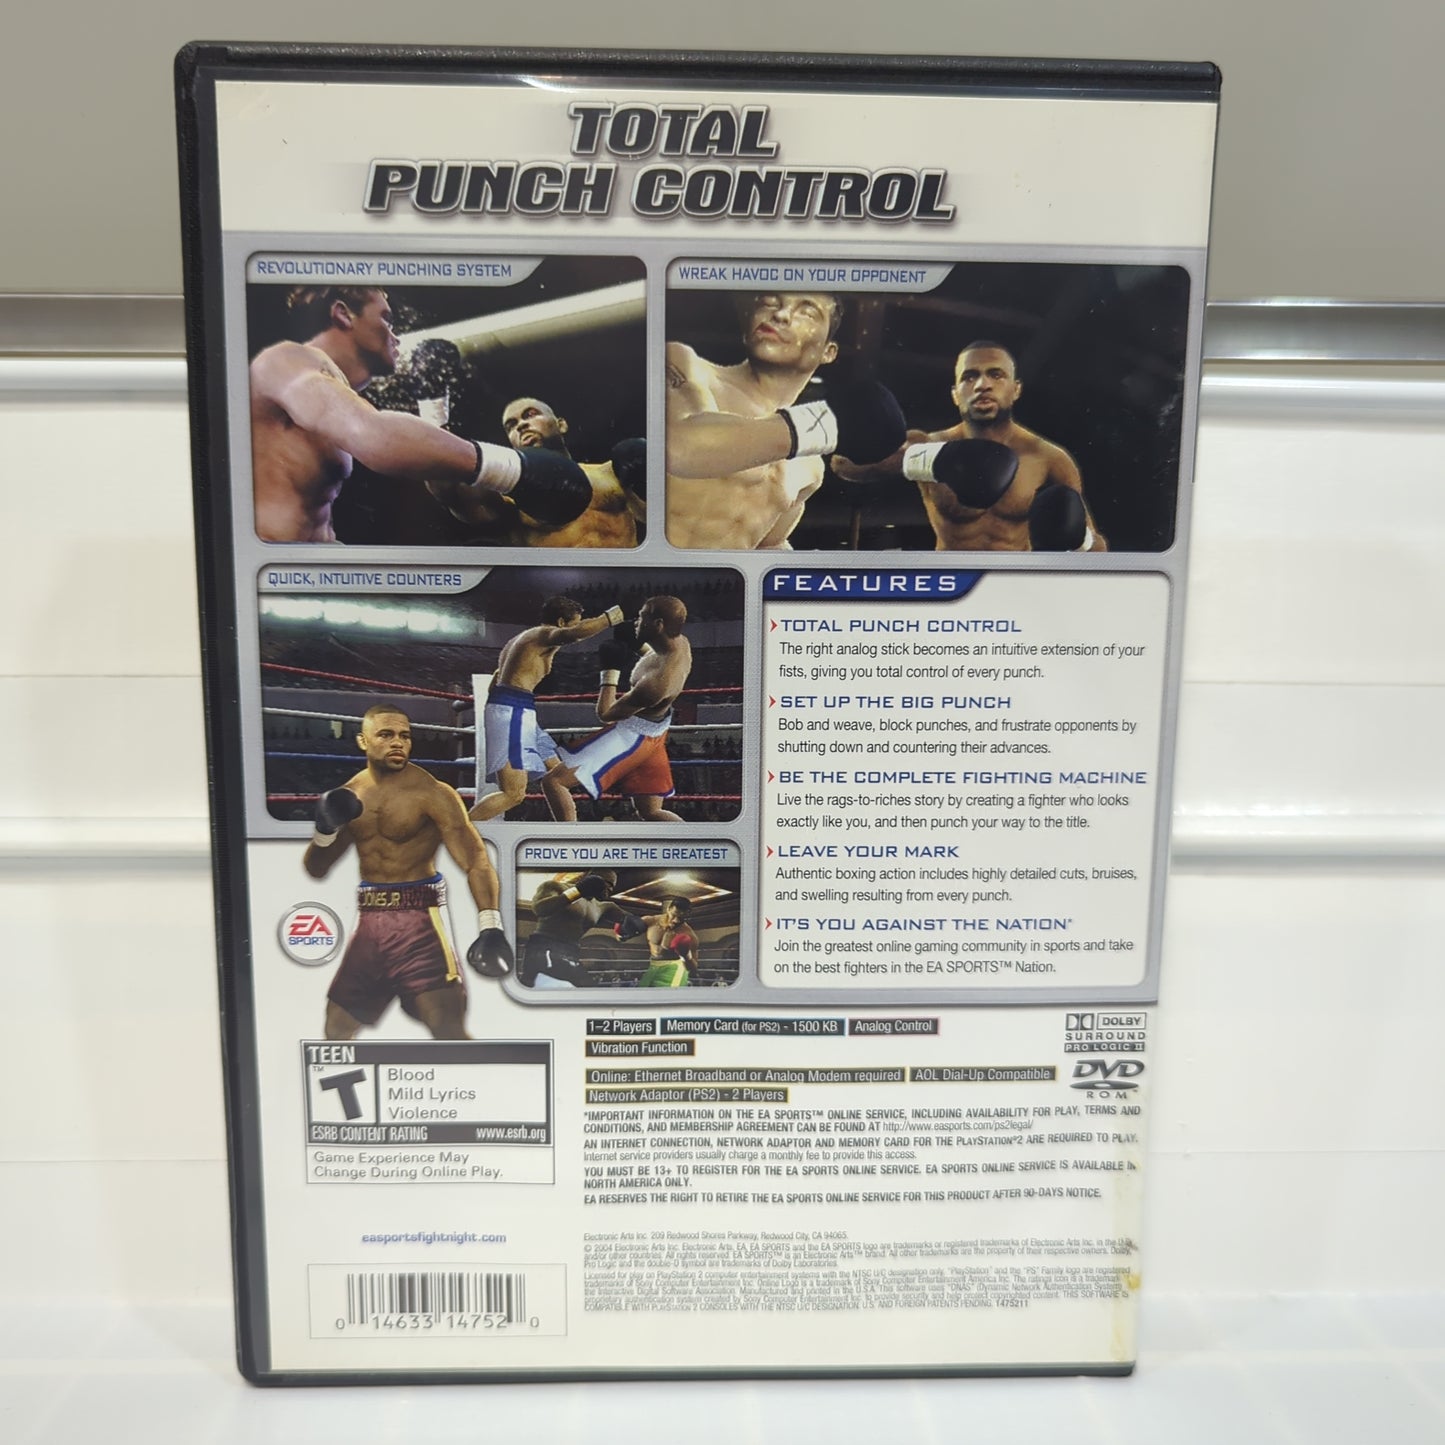 Fight Night 2004 - Playstation 2